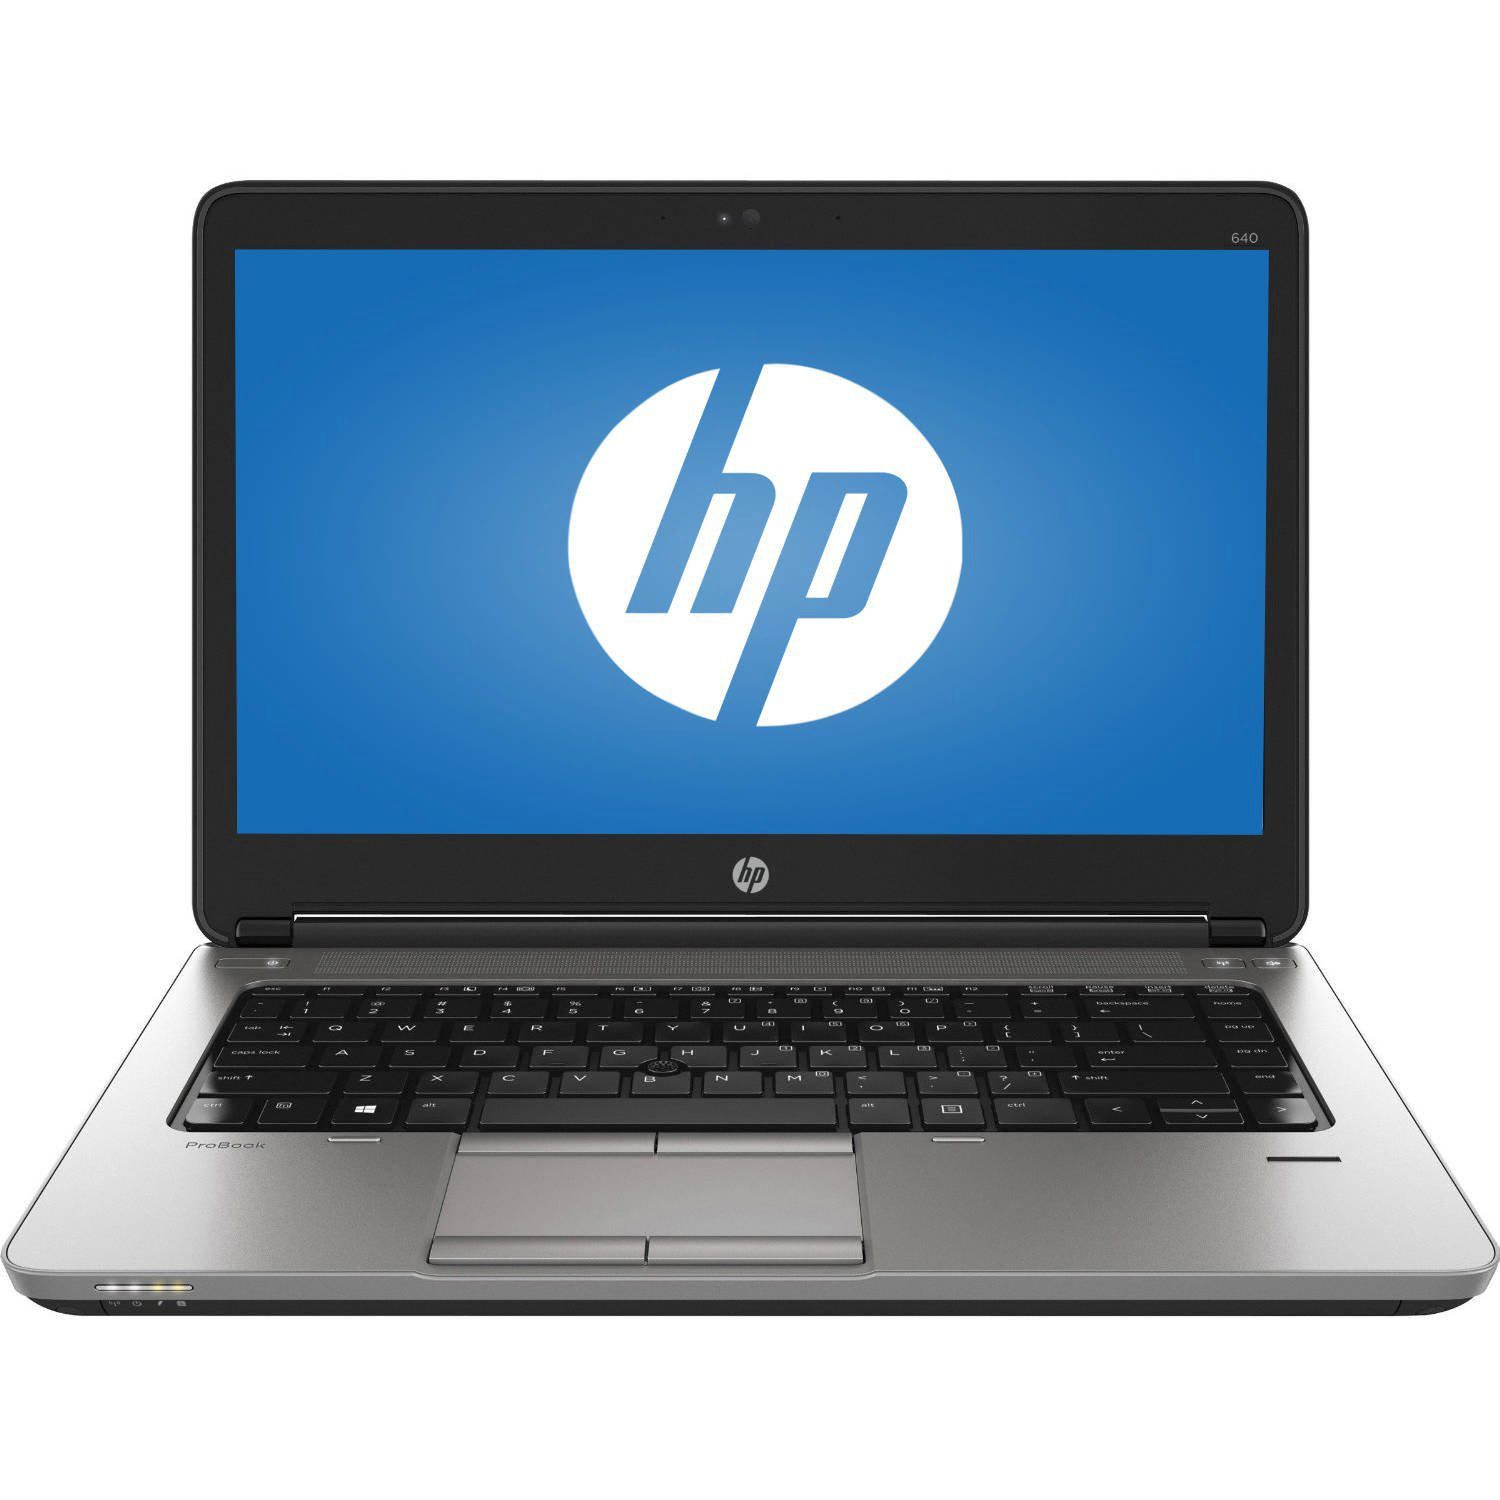 Refurbished Hp Probook 640 G1 14” Laptop With Intel Core I5 4300m 26 Ghz Processor Walmart 5409